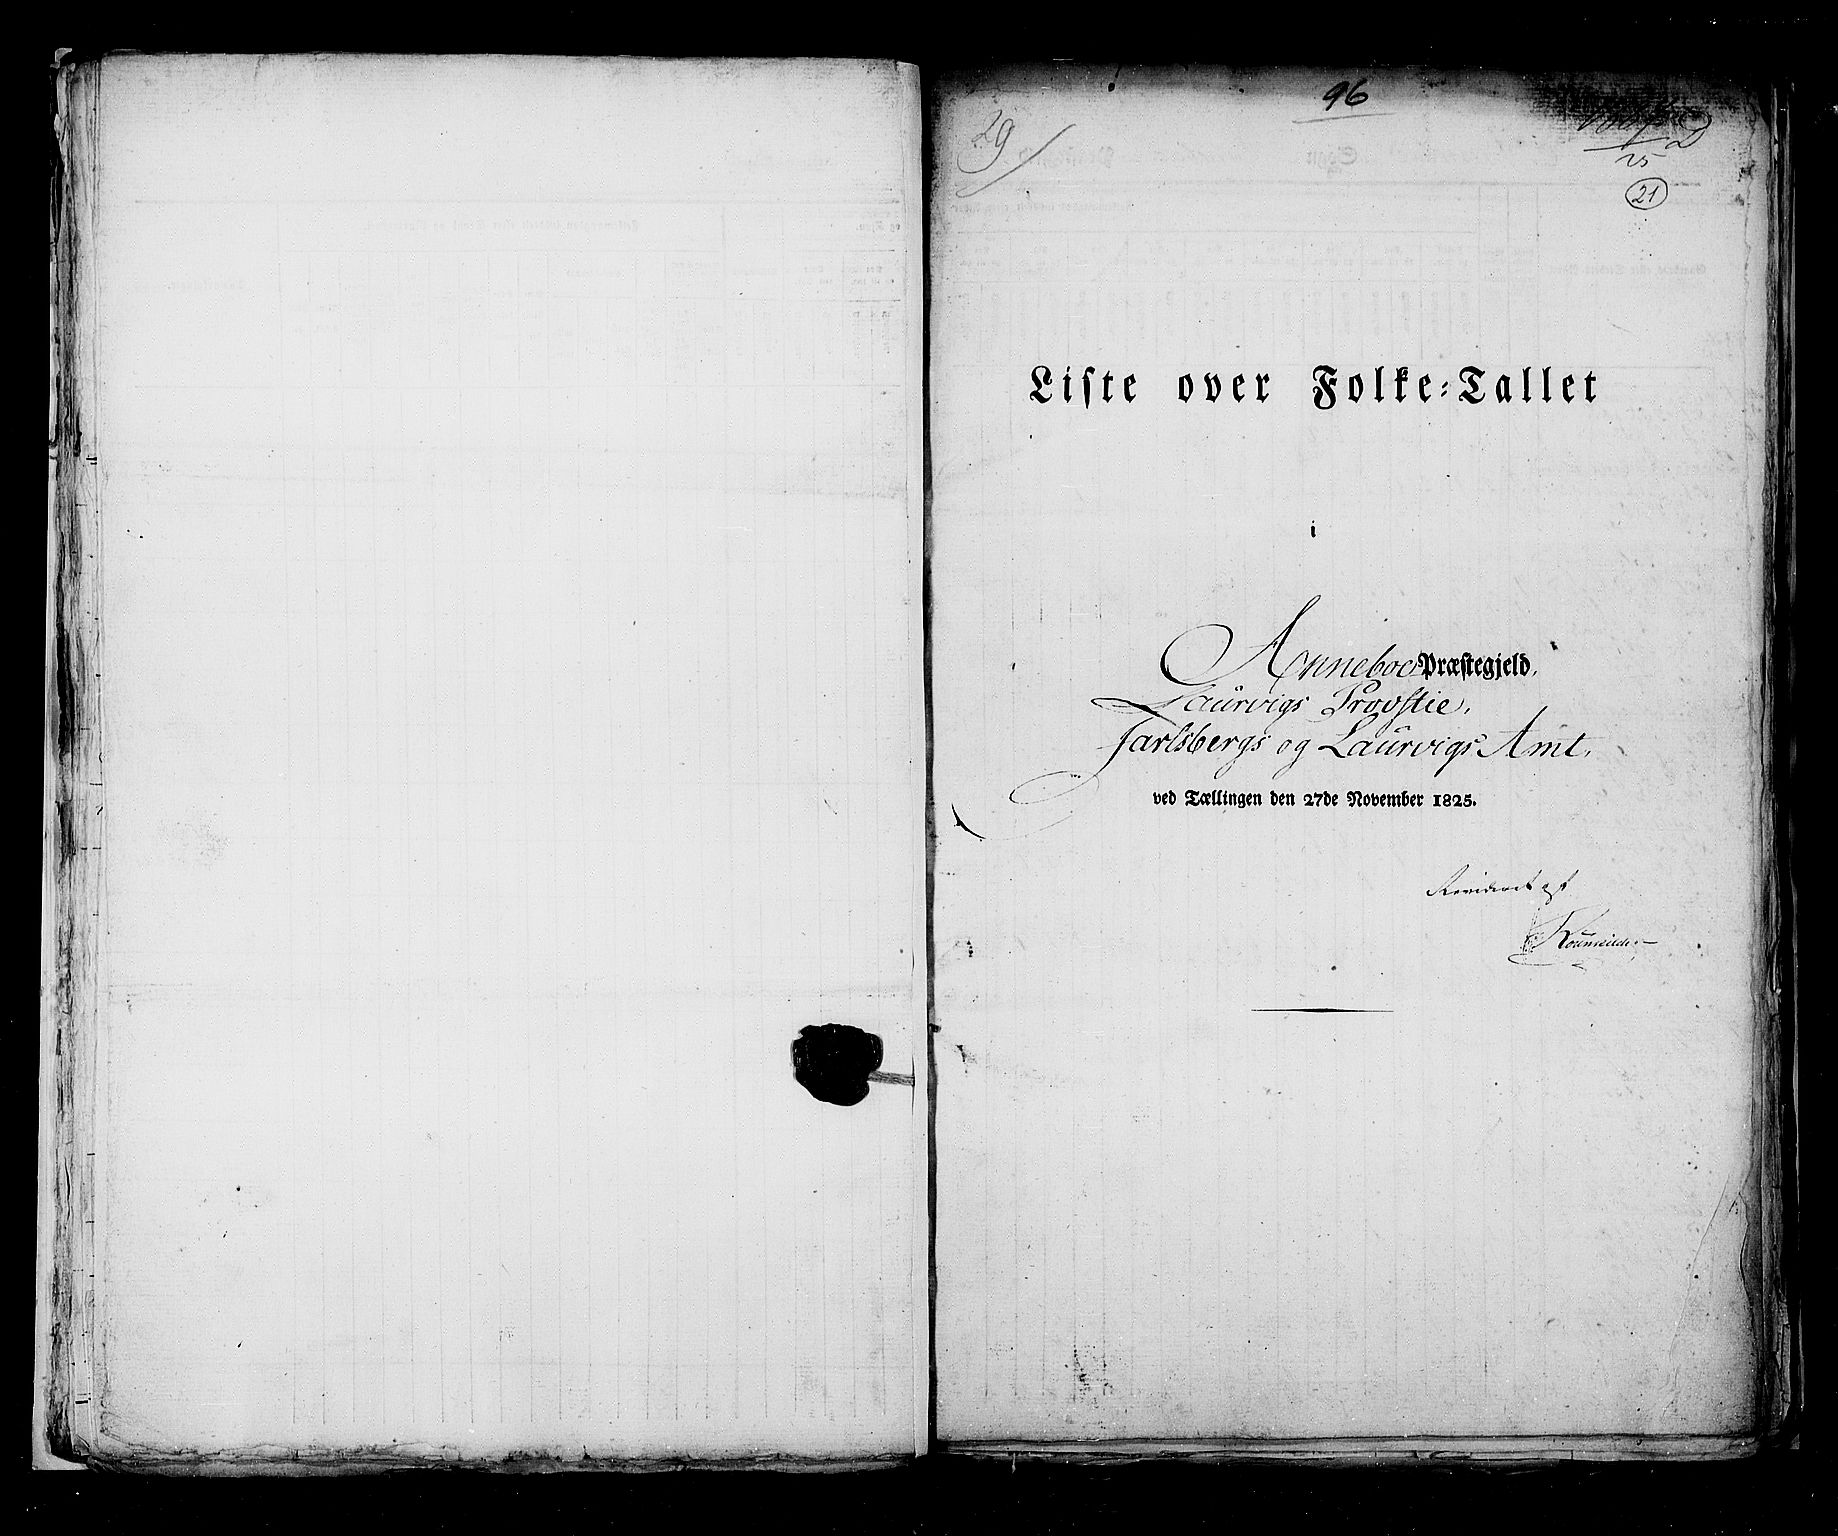 RA, Census 1825, vol. 8: Jarlsberg og Larvik amt, 1825, p. 21